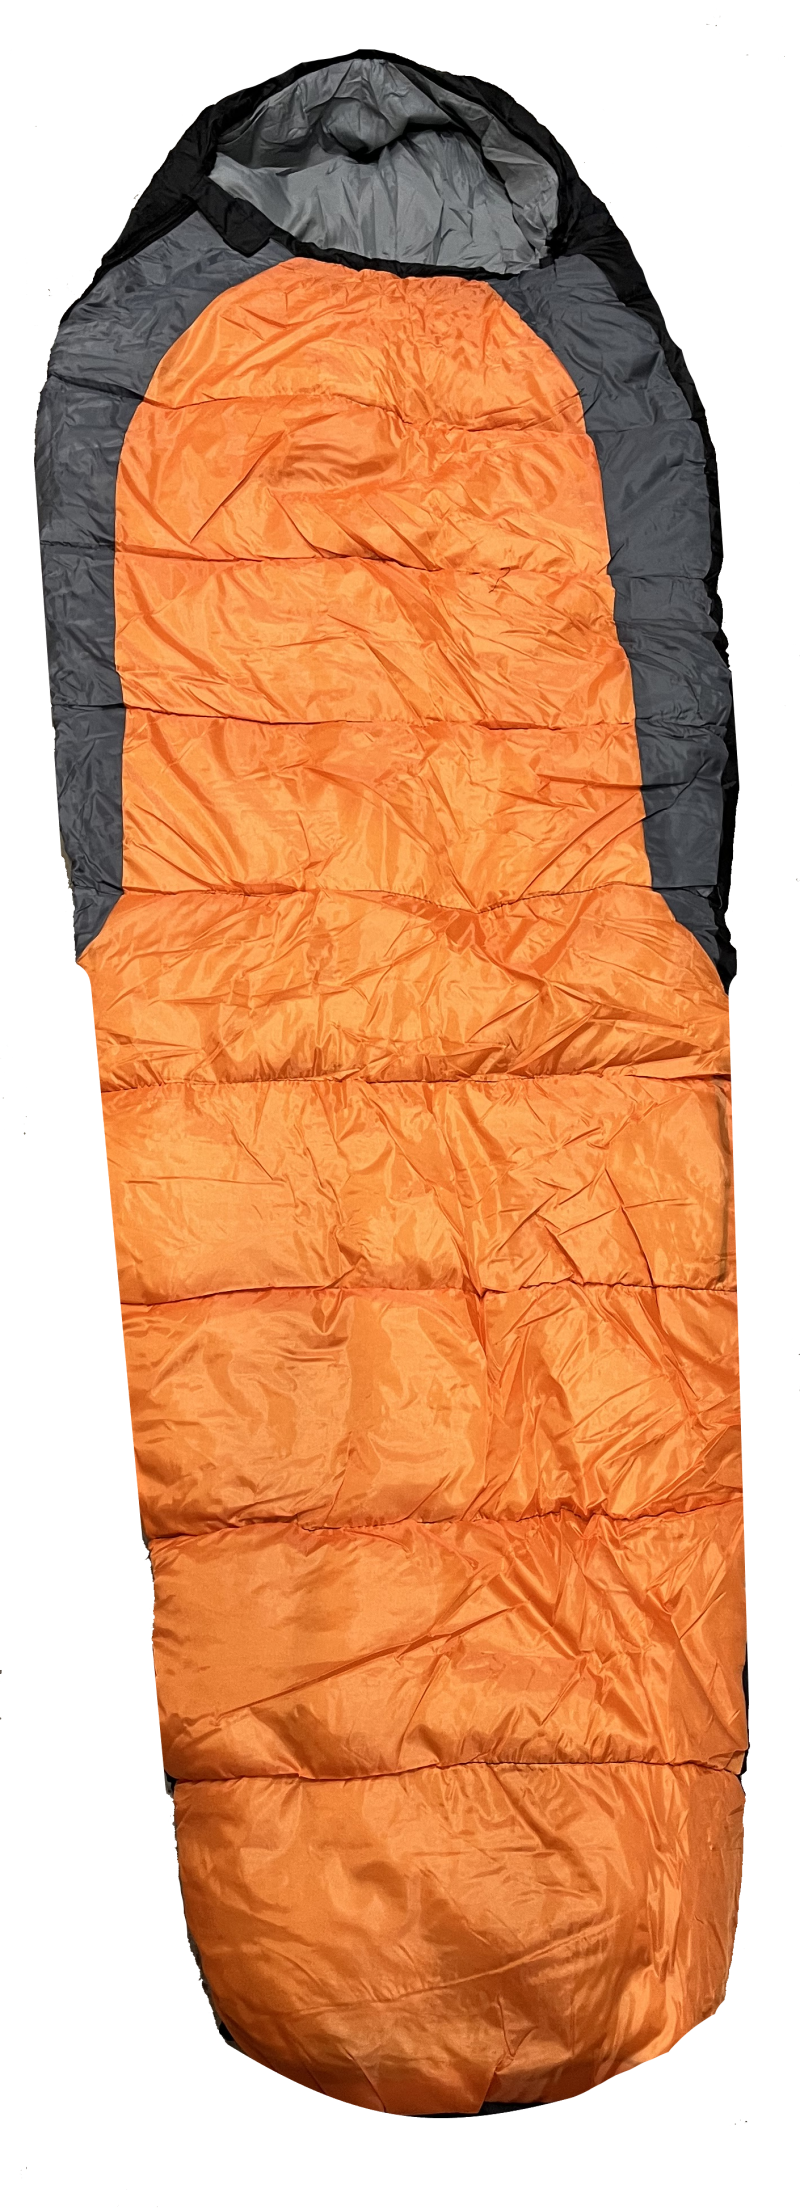 Mummy Sleeping Bag 7' Camping Hiking Backpacking Sleep Sack 20 Degrees f